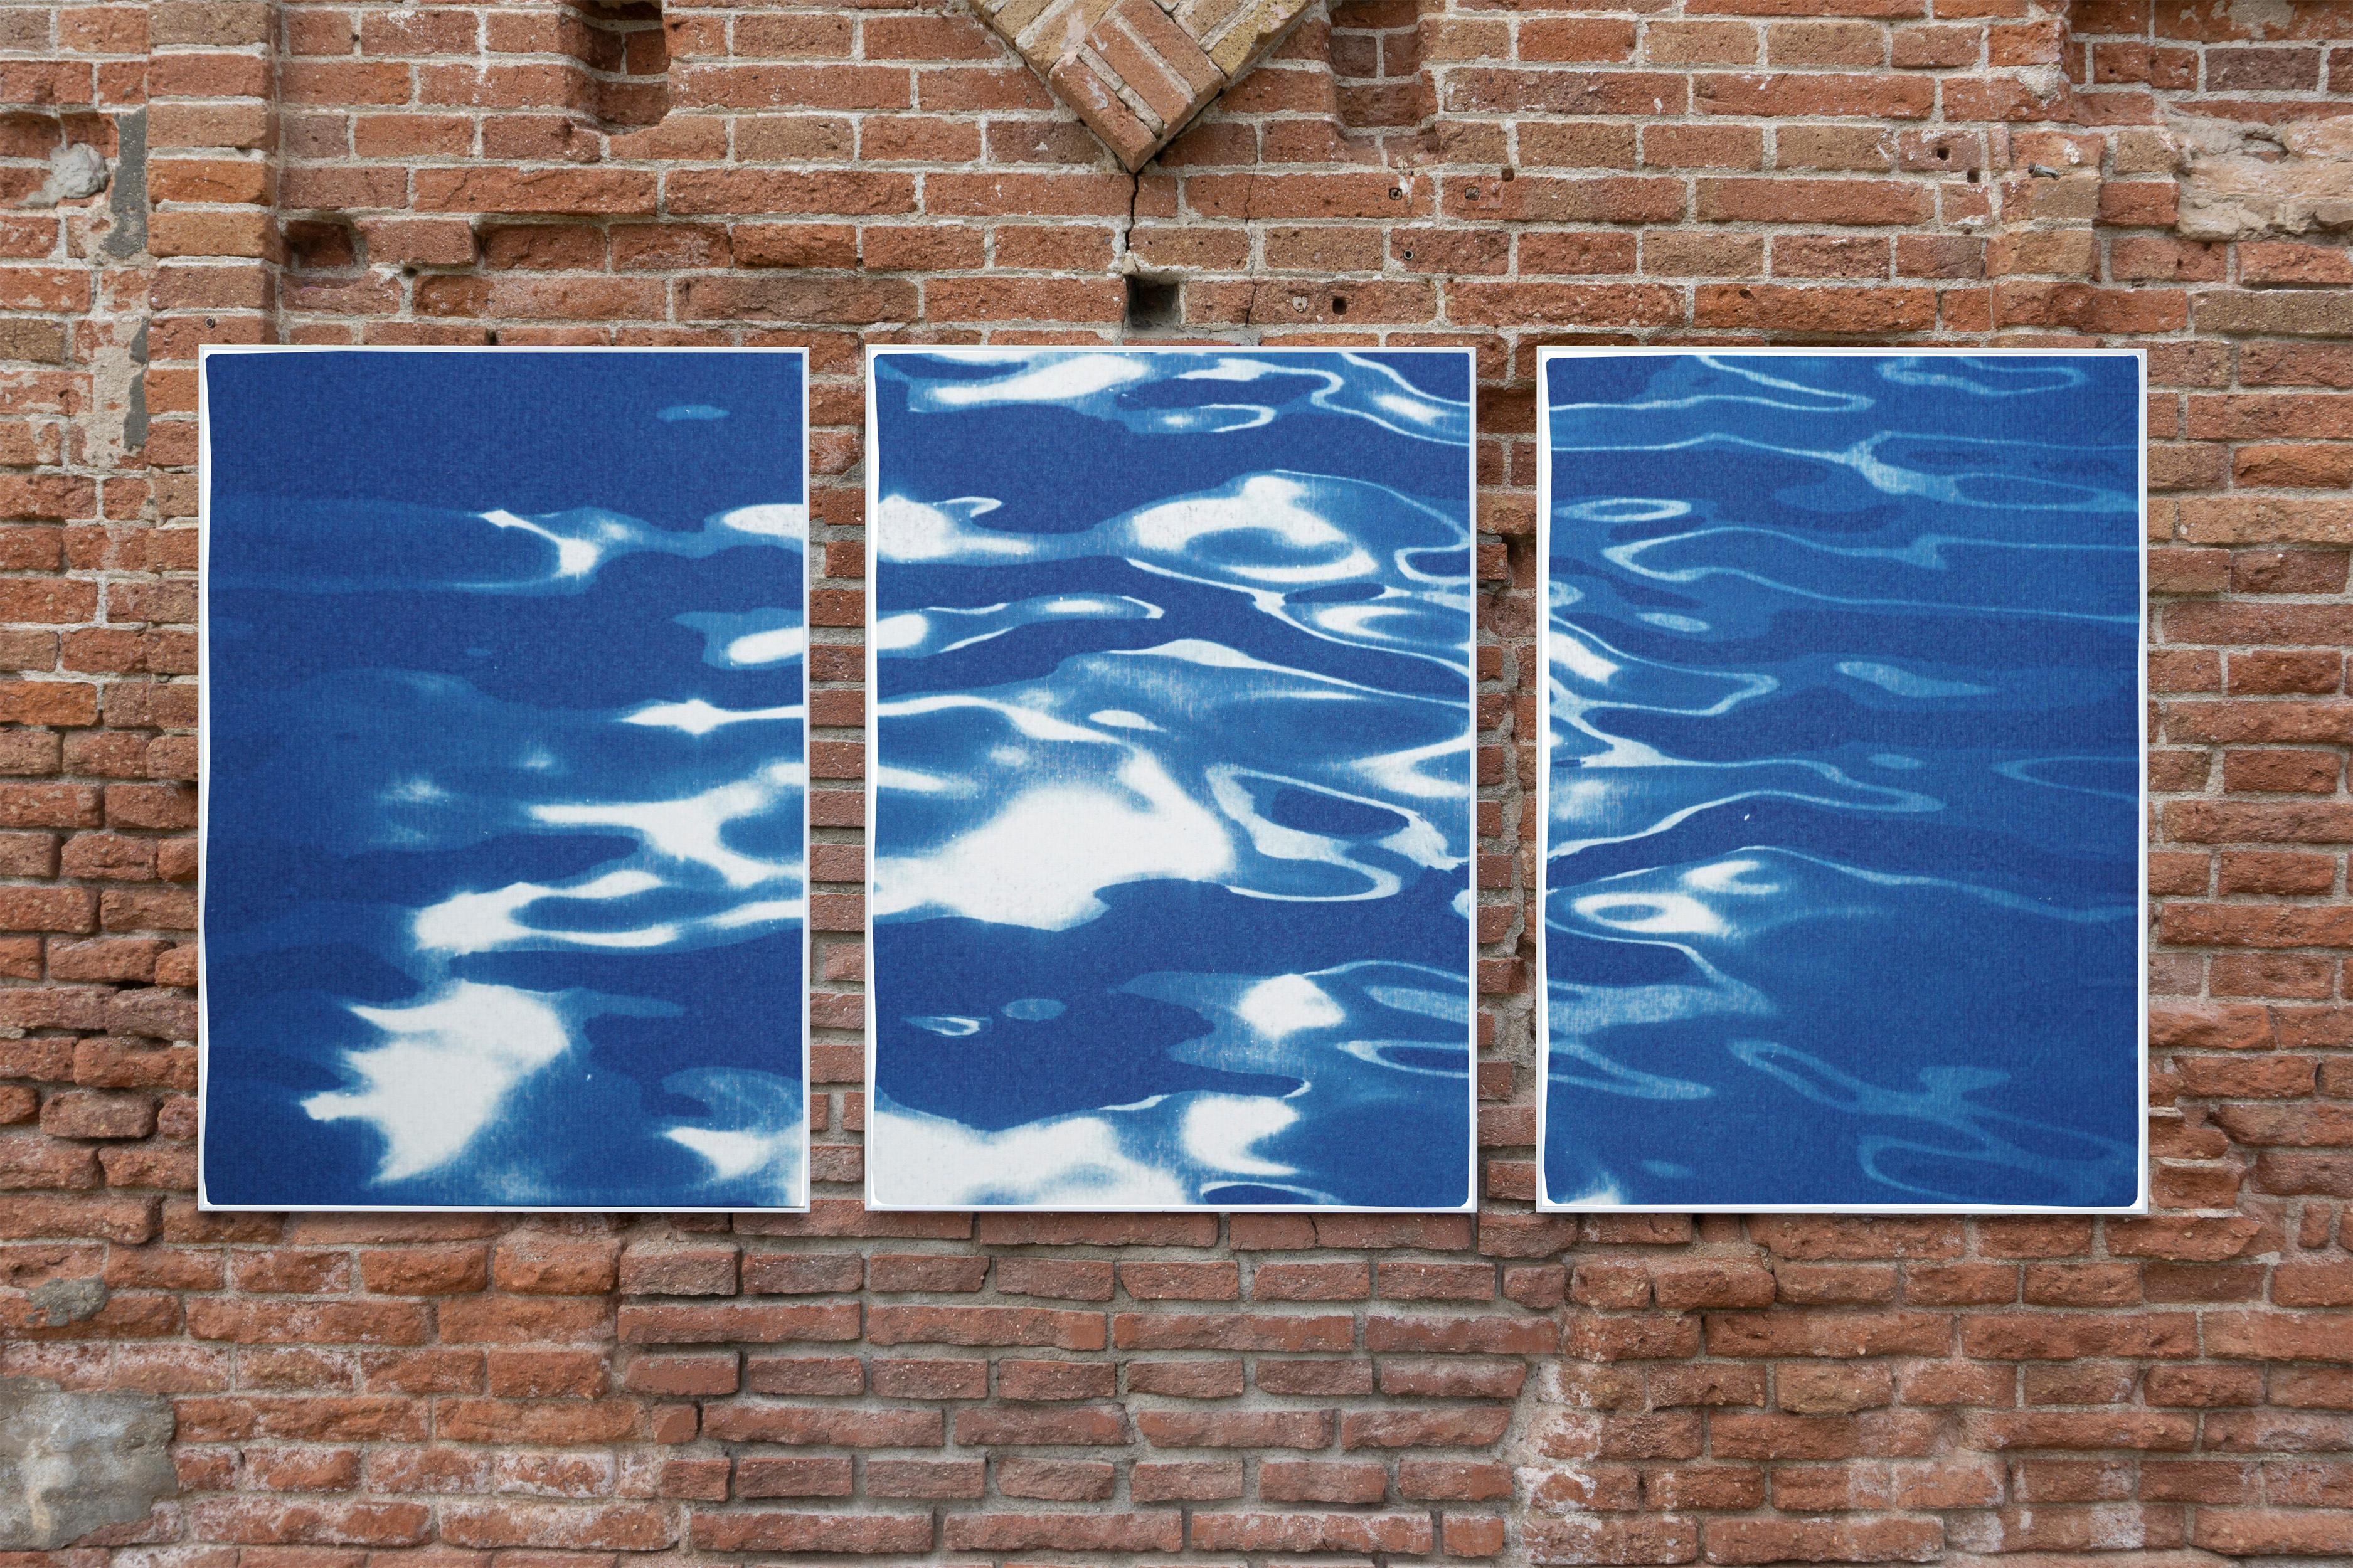 Lido Island Reflections, Venice Landscape Blue Tones, Minimal Cyanotype Print  6